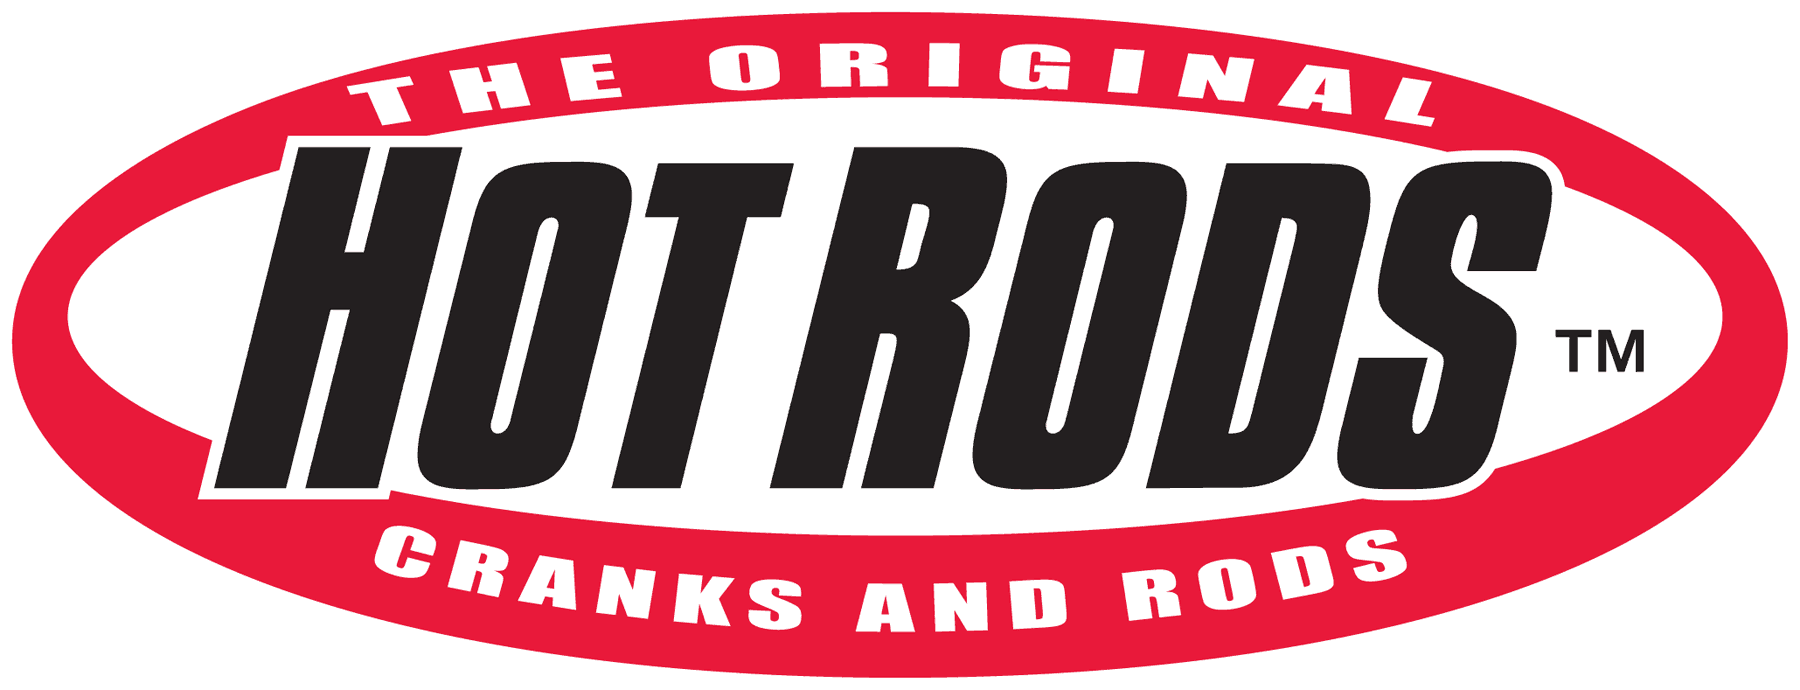 Hot Rod Logo - Hot Rods, Inc.